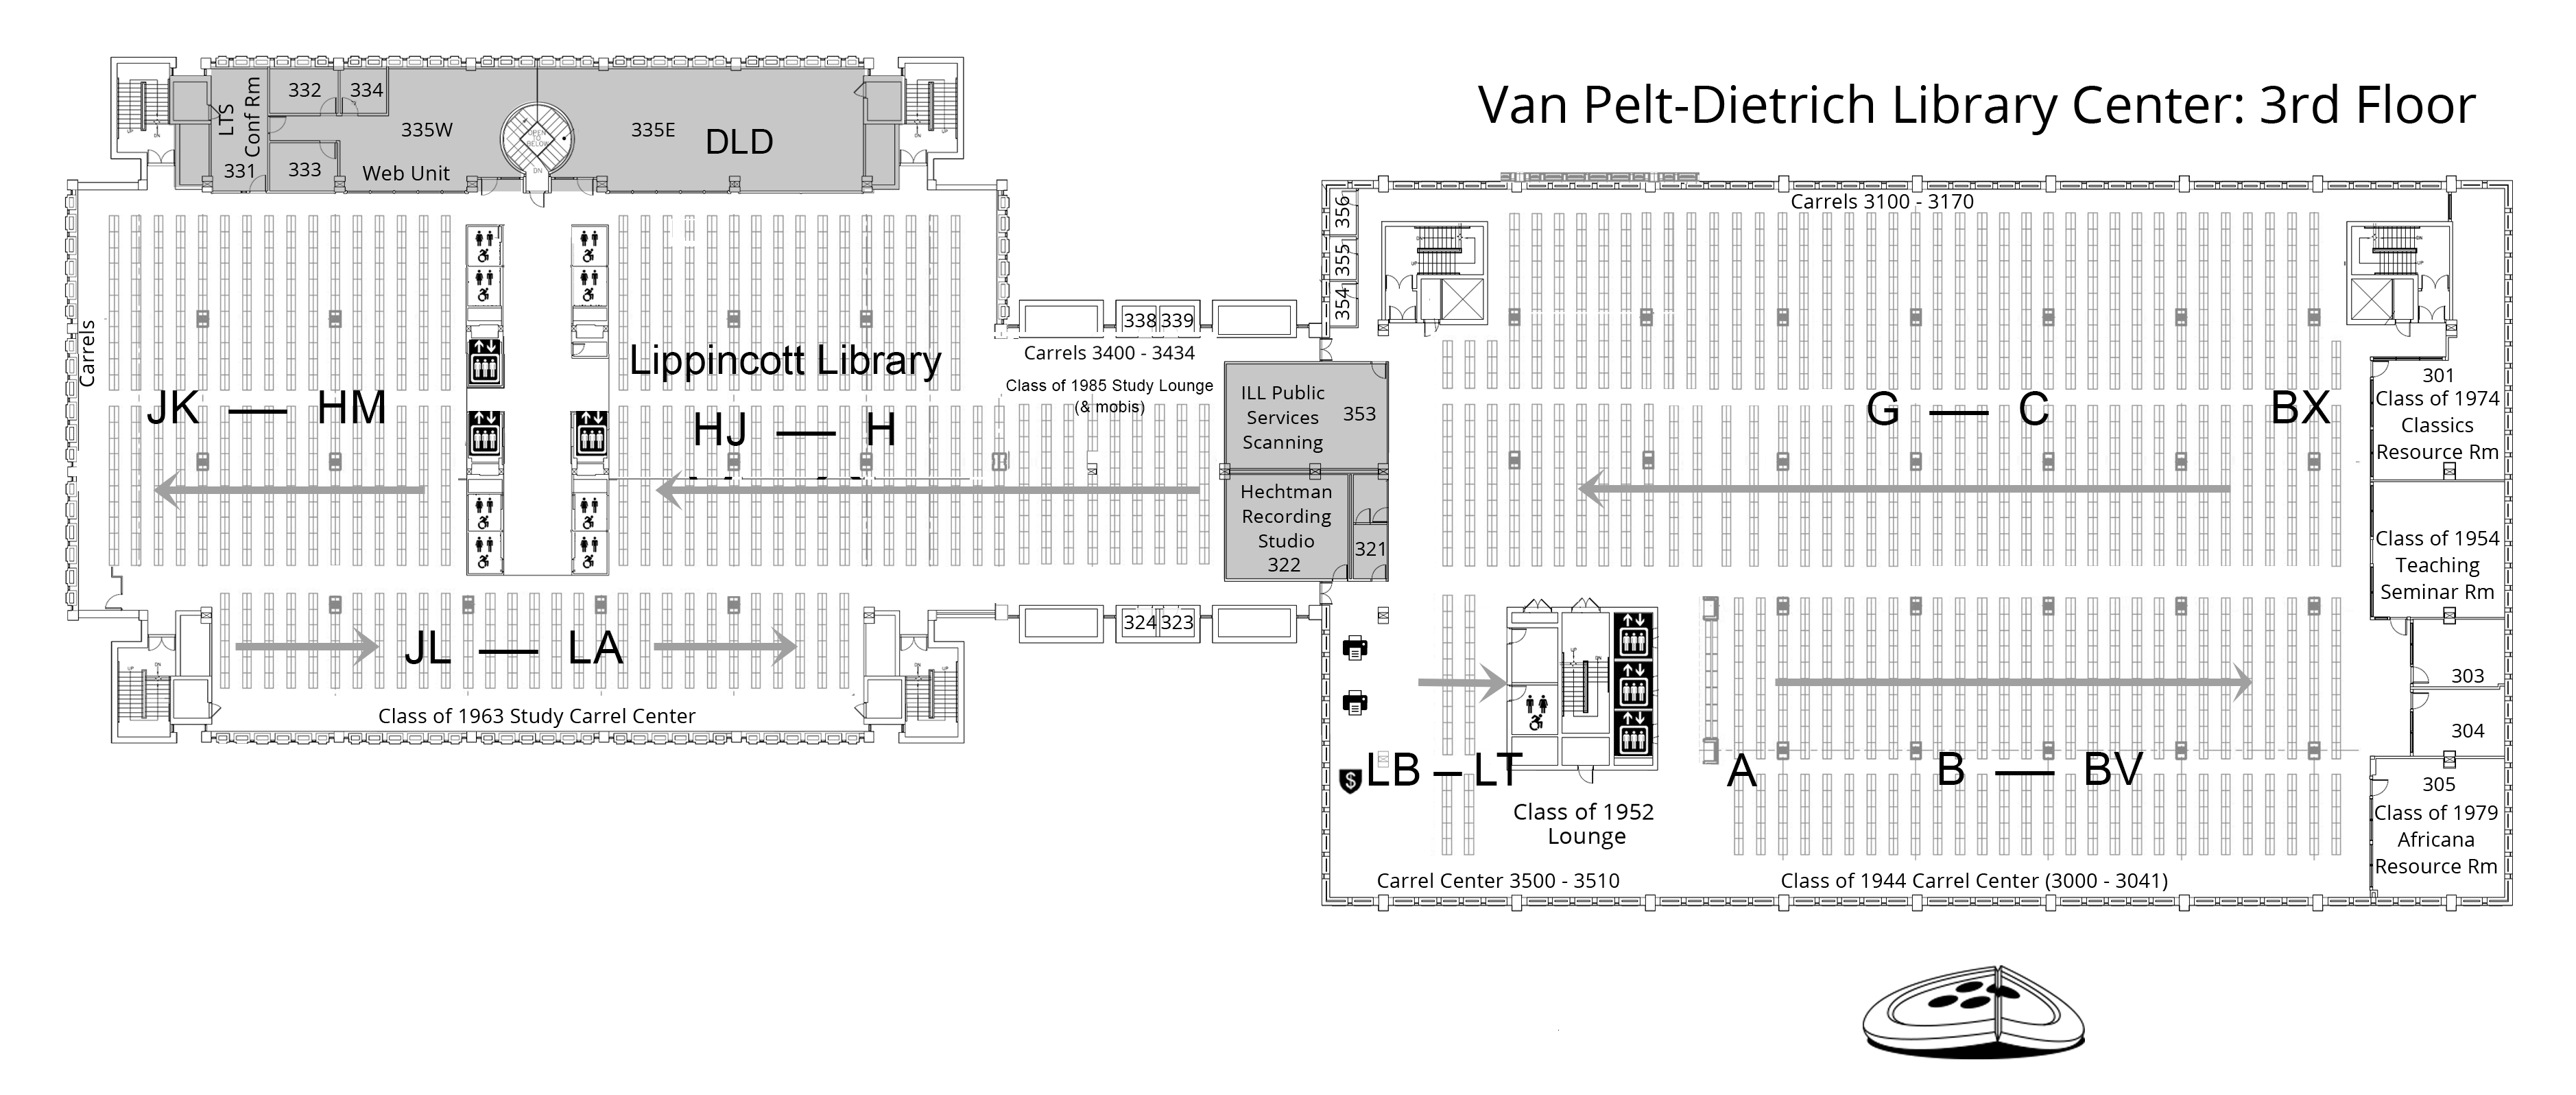 third floor plan, Van Pelt-Dietrich Library Center. Full description is linked below.